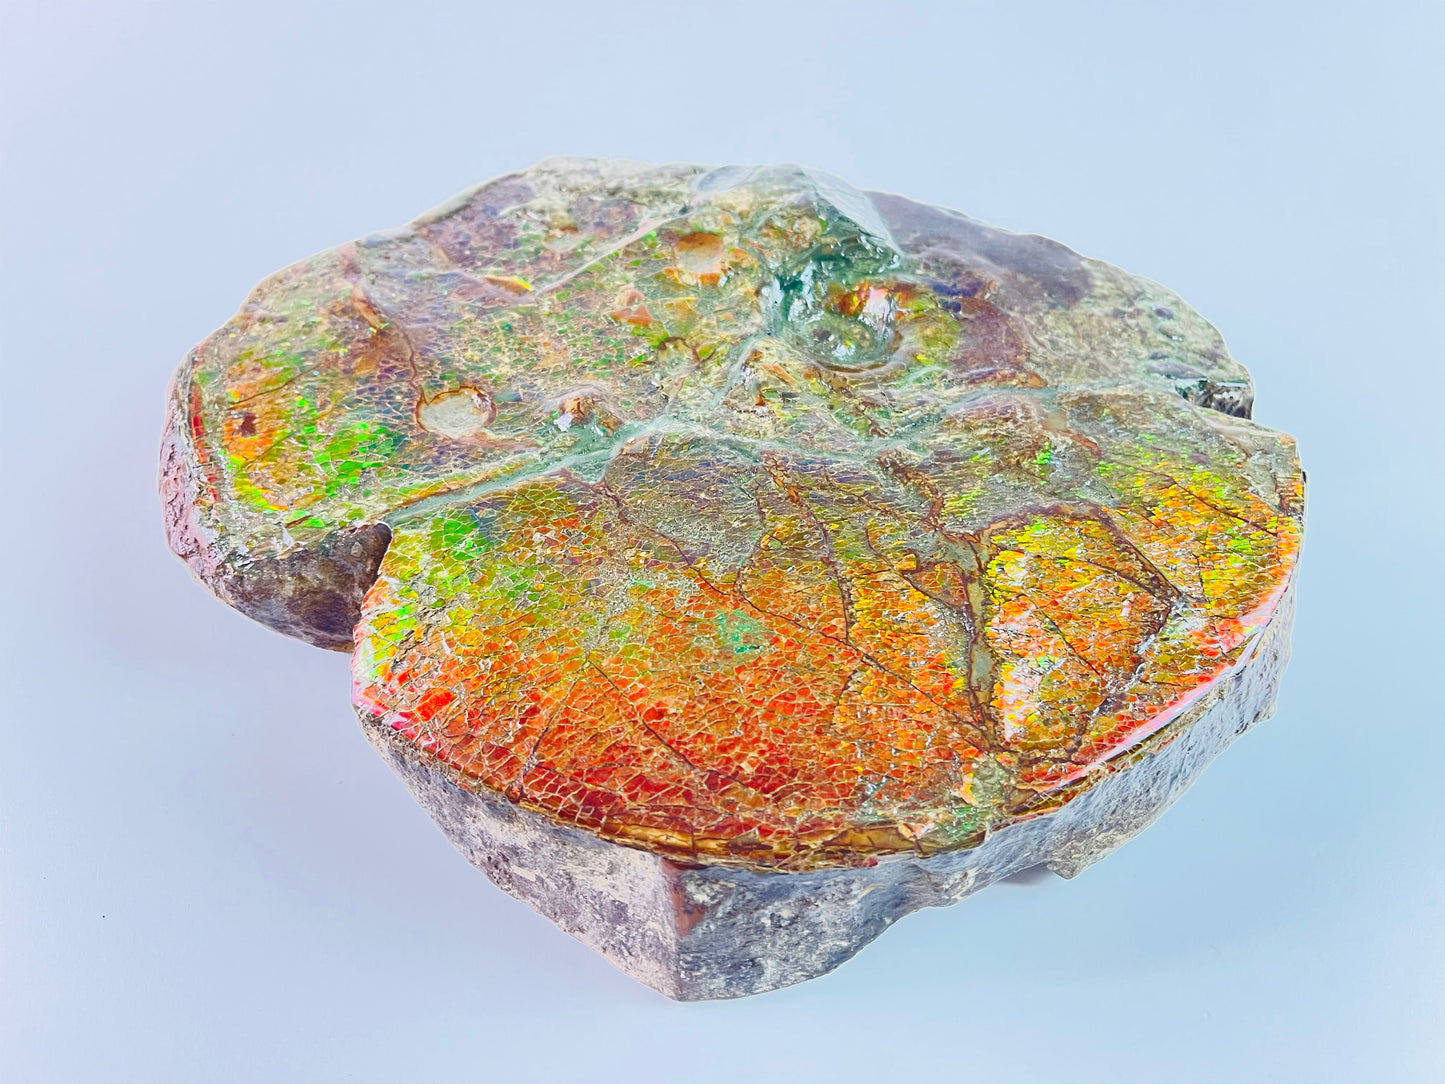 SOLD - Ammolite Art - Boykosaurus Dino Specimen w/ rainbow colors & mosasaur bites